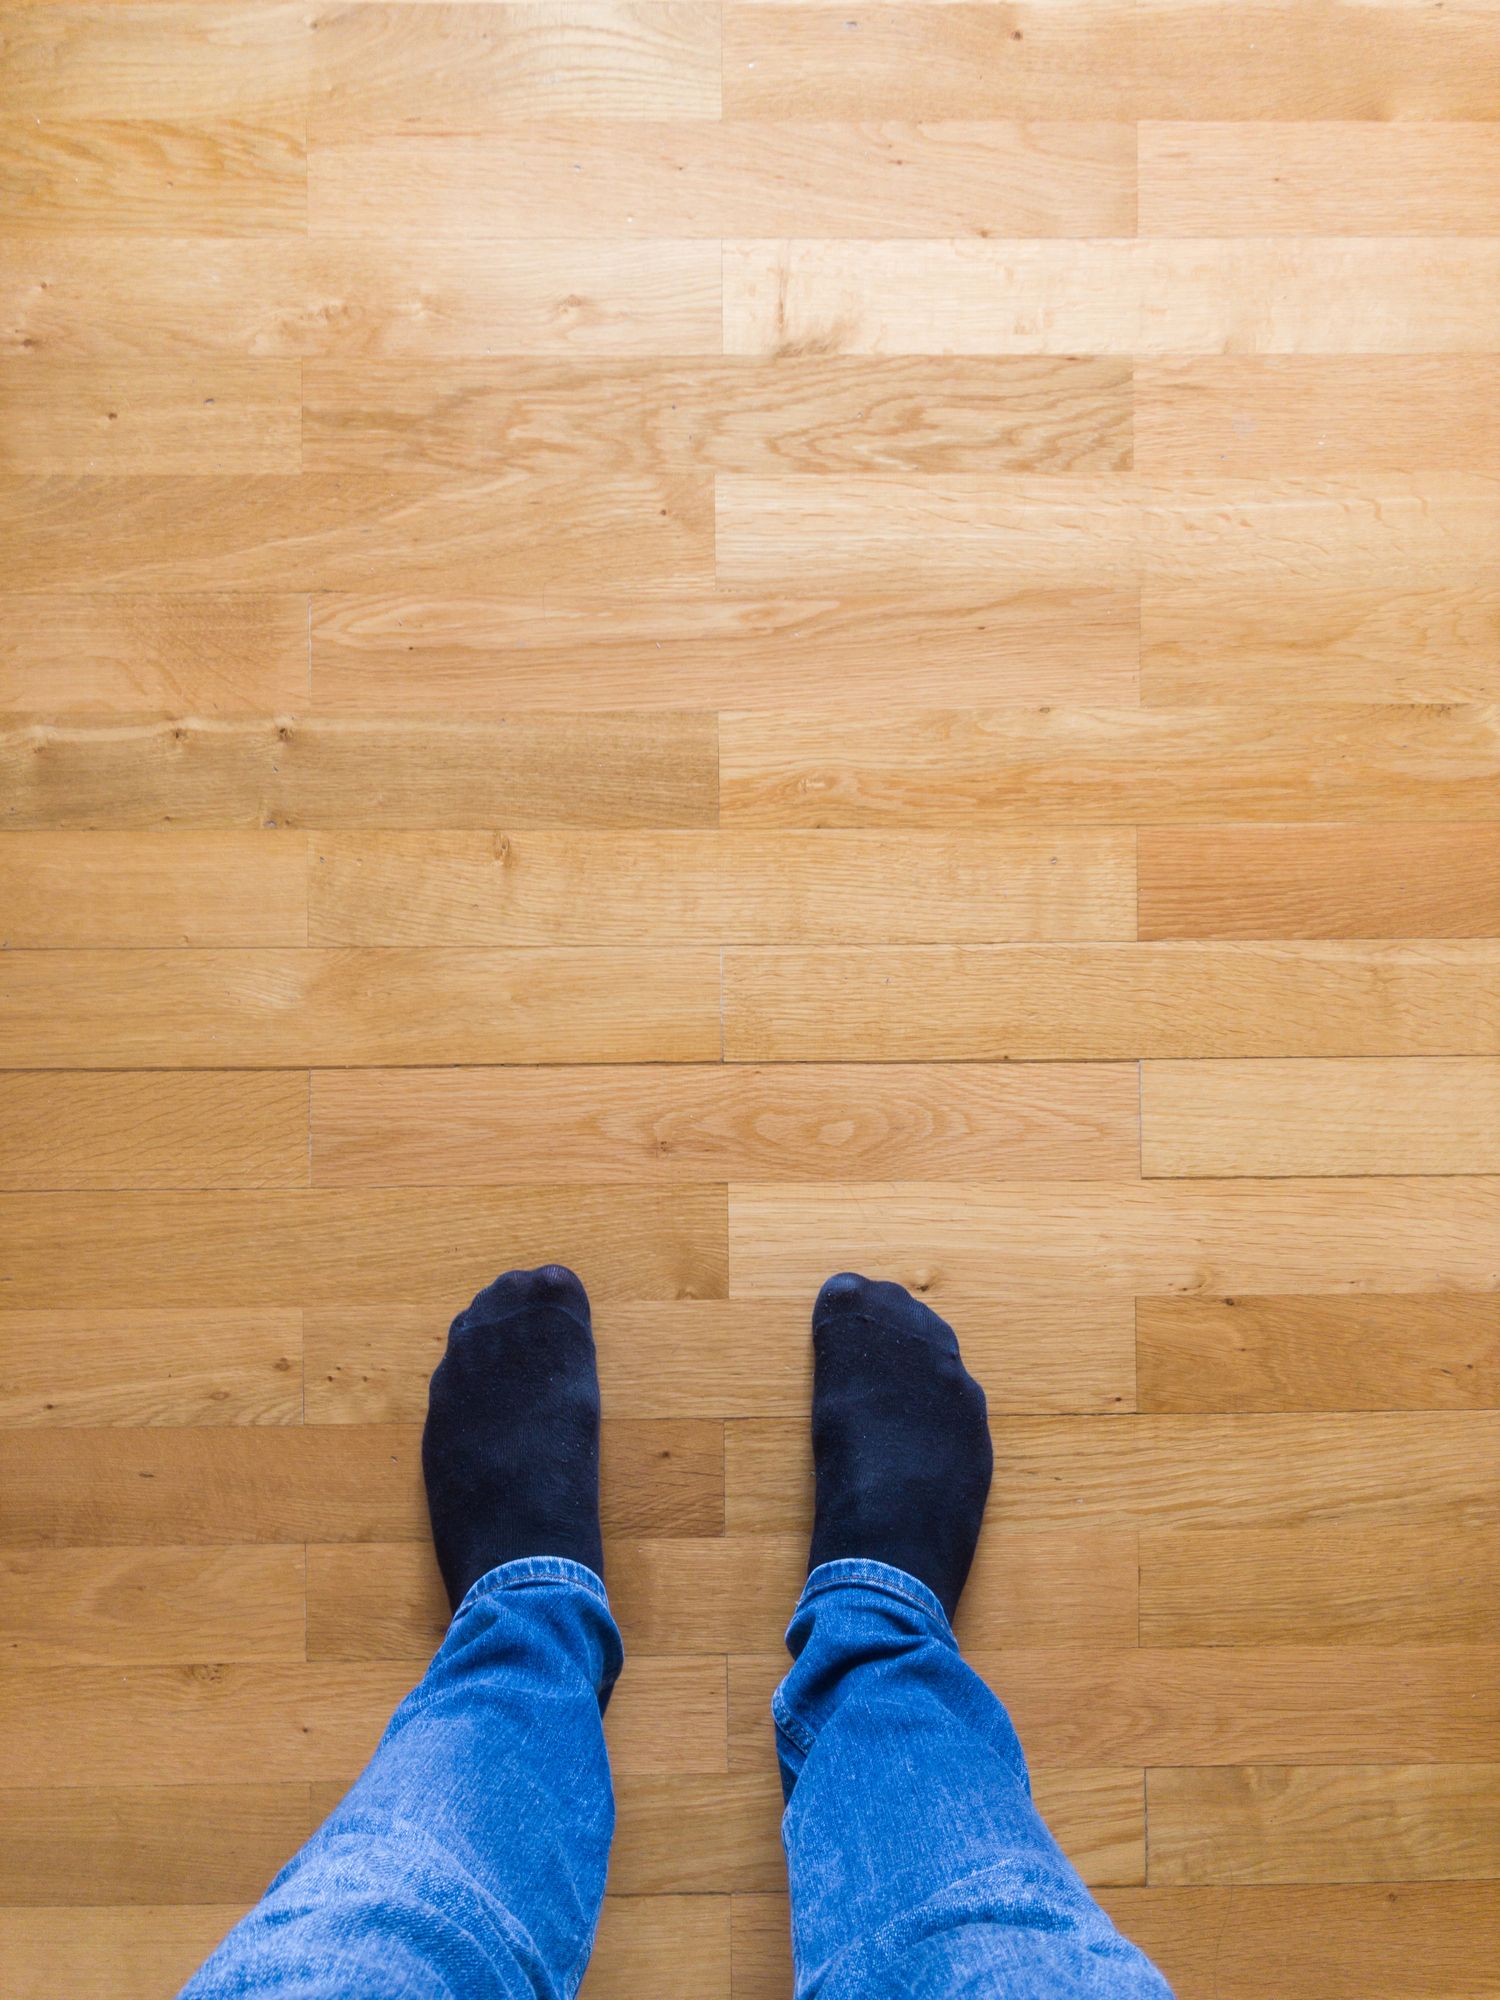 Squeaky Floor Repair, How To Get Rid Of Gaps In Hardwood Floor